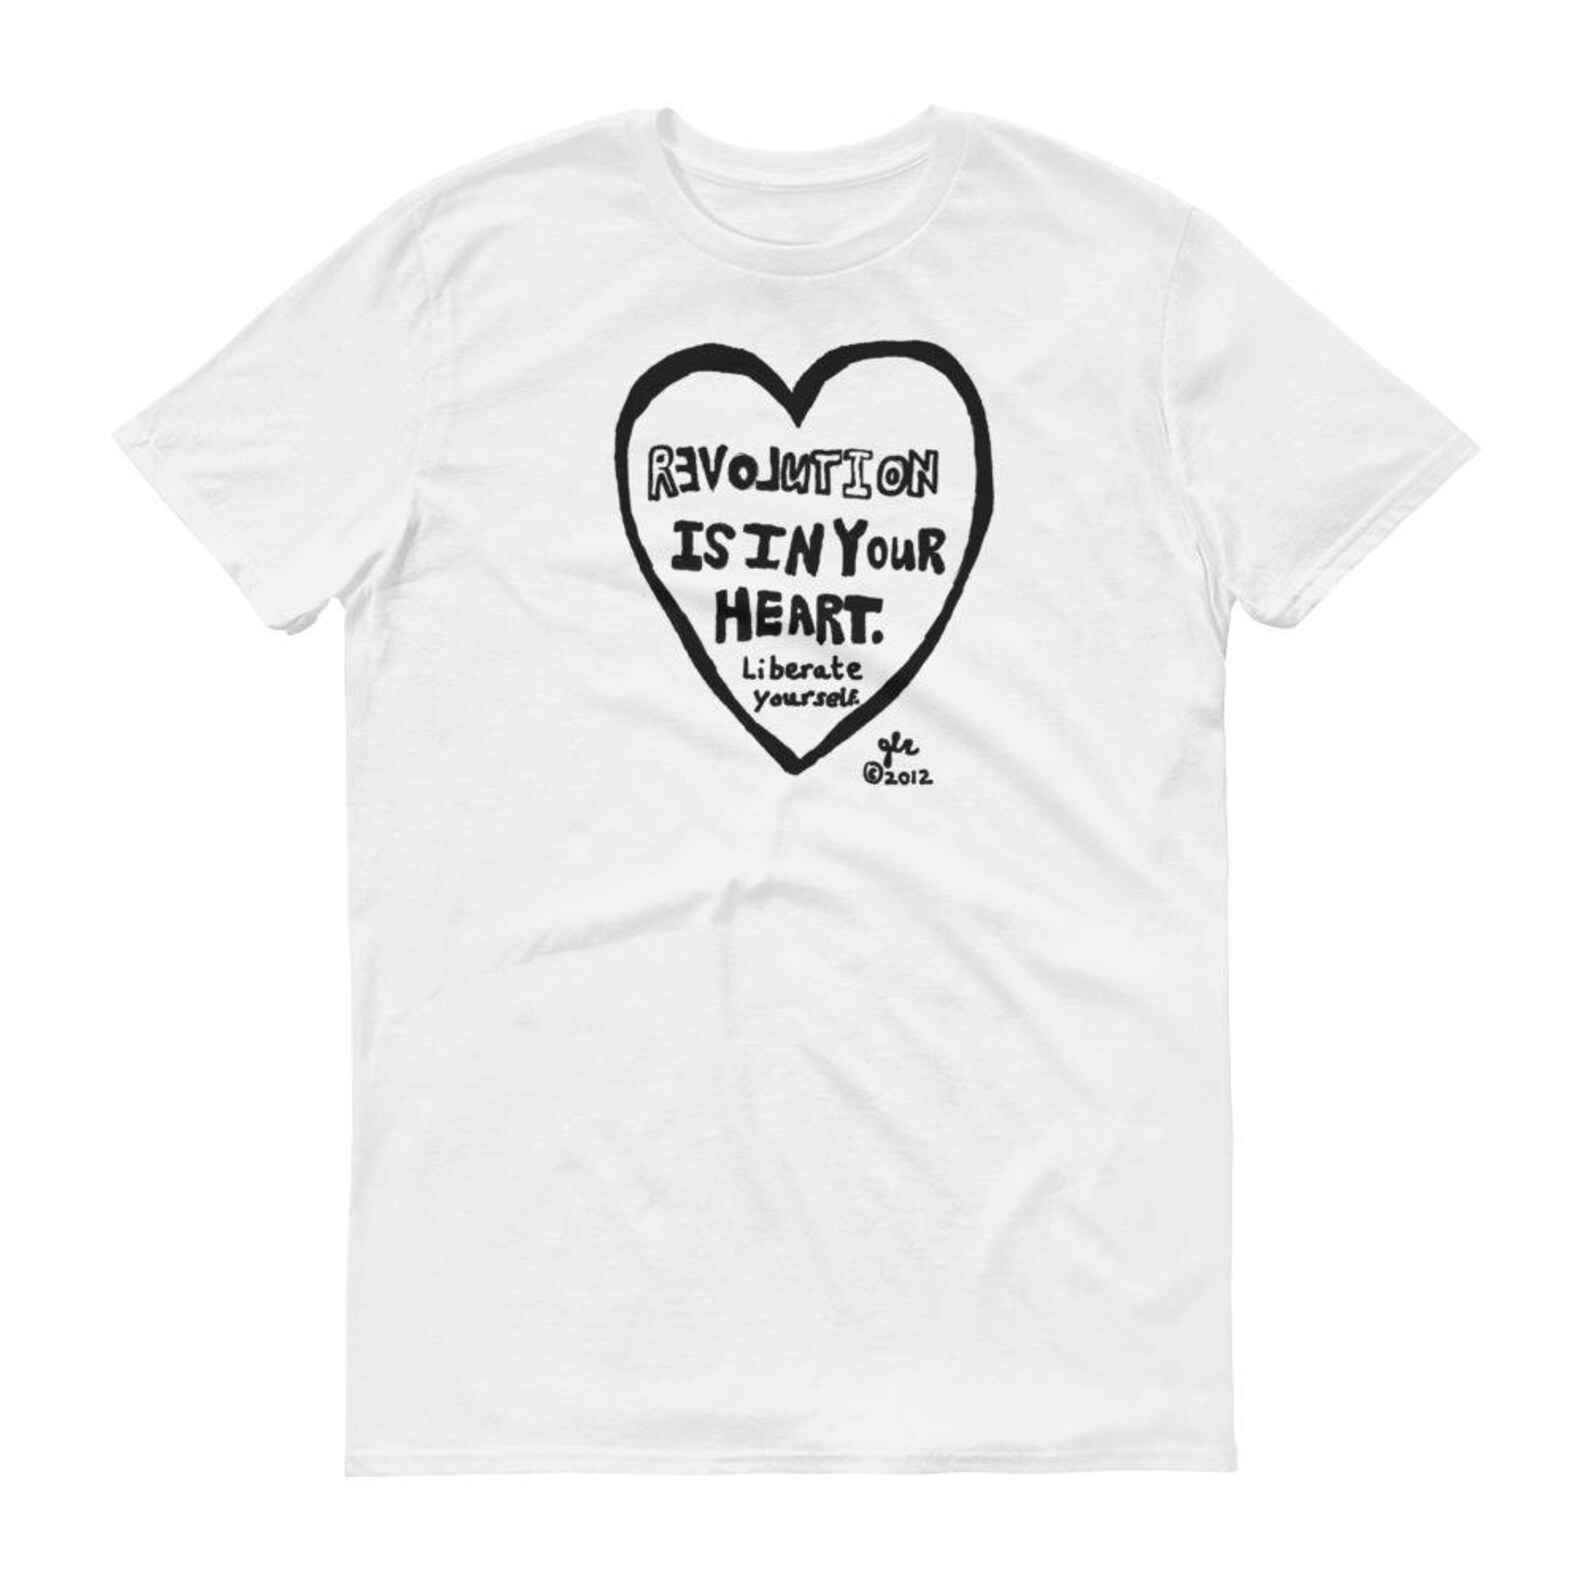 Art Punk Shirts Punk Shirt Print Truth DIY Crust Anarchy Love | Etsy